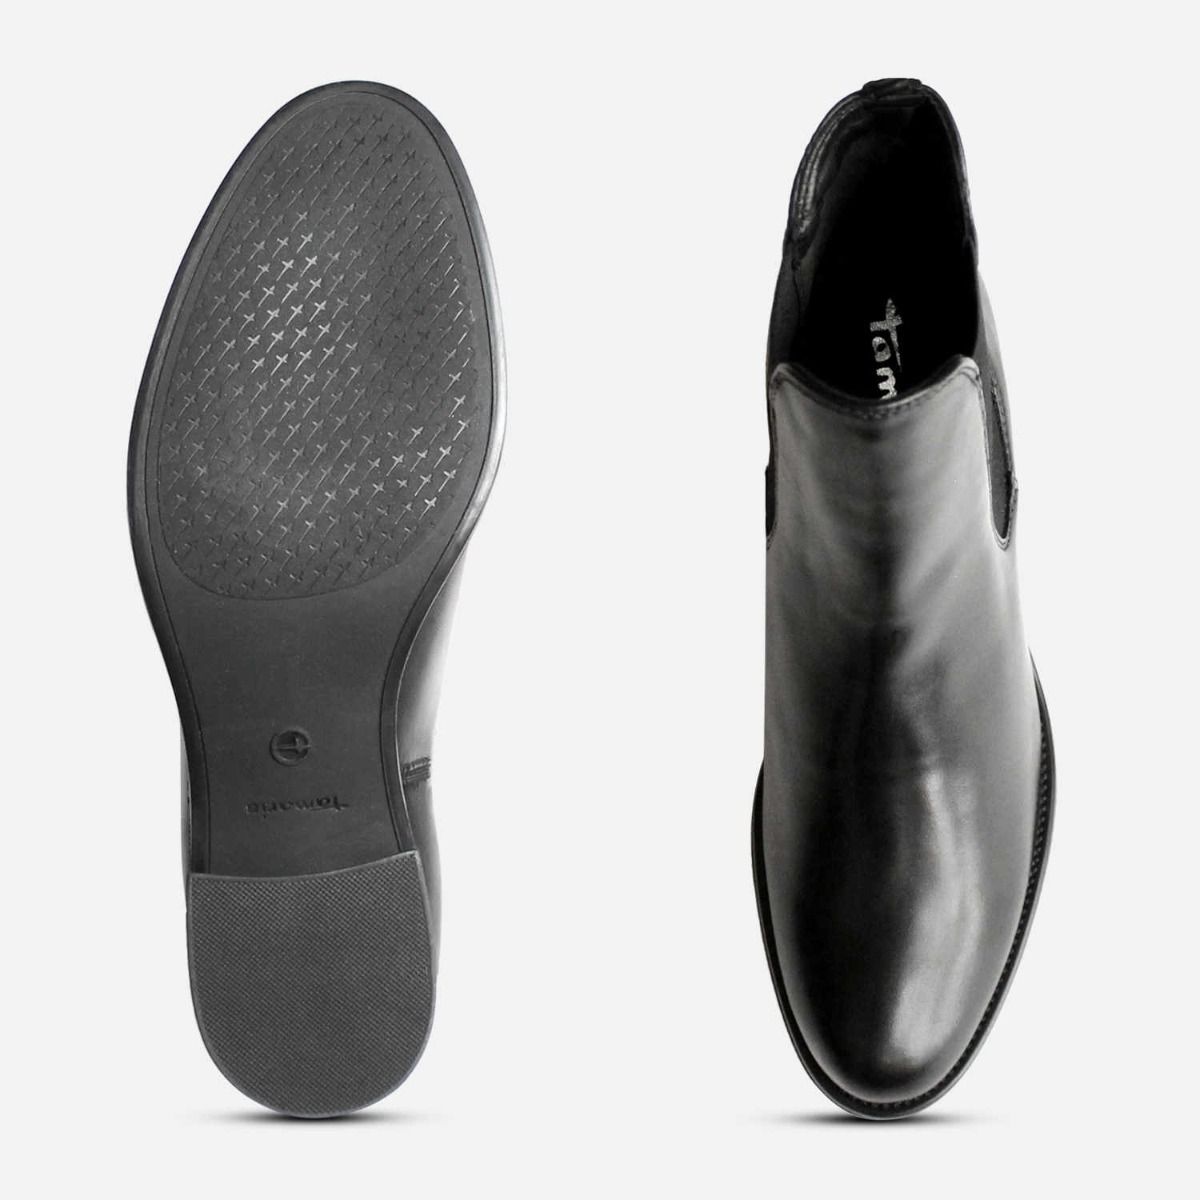 Black Napa Leather Tamaris Heeled Womens Boots